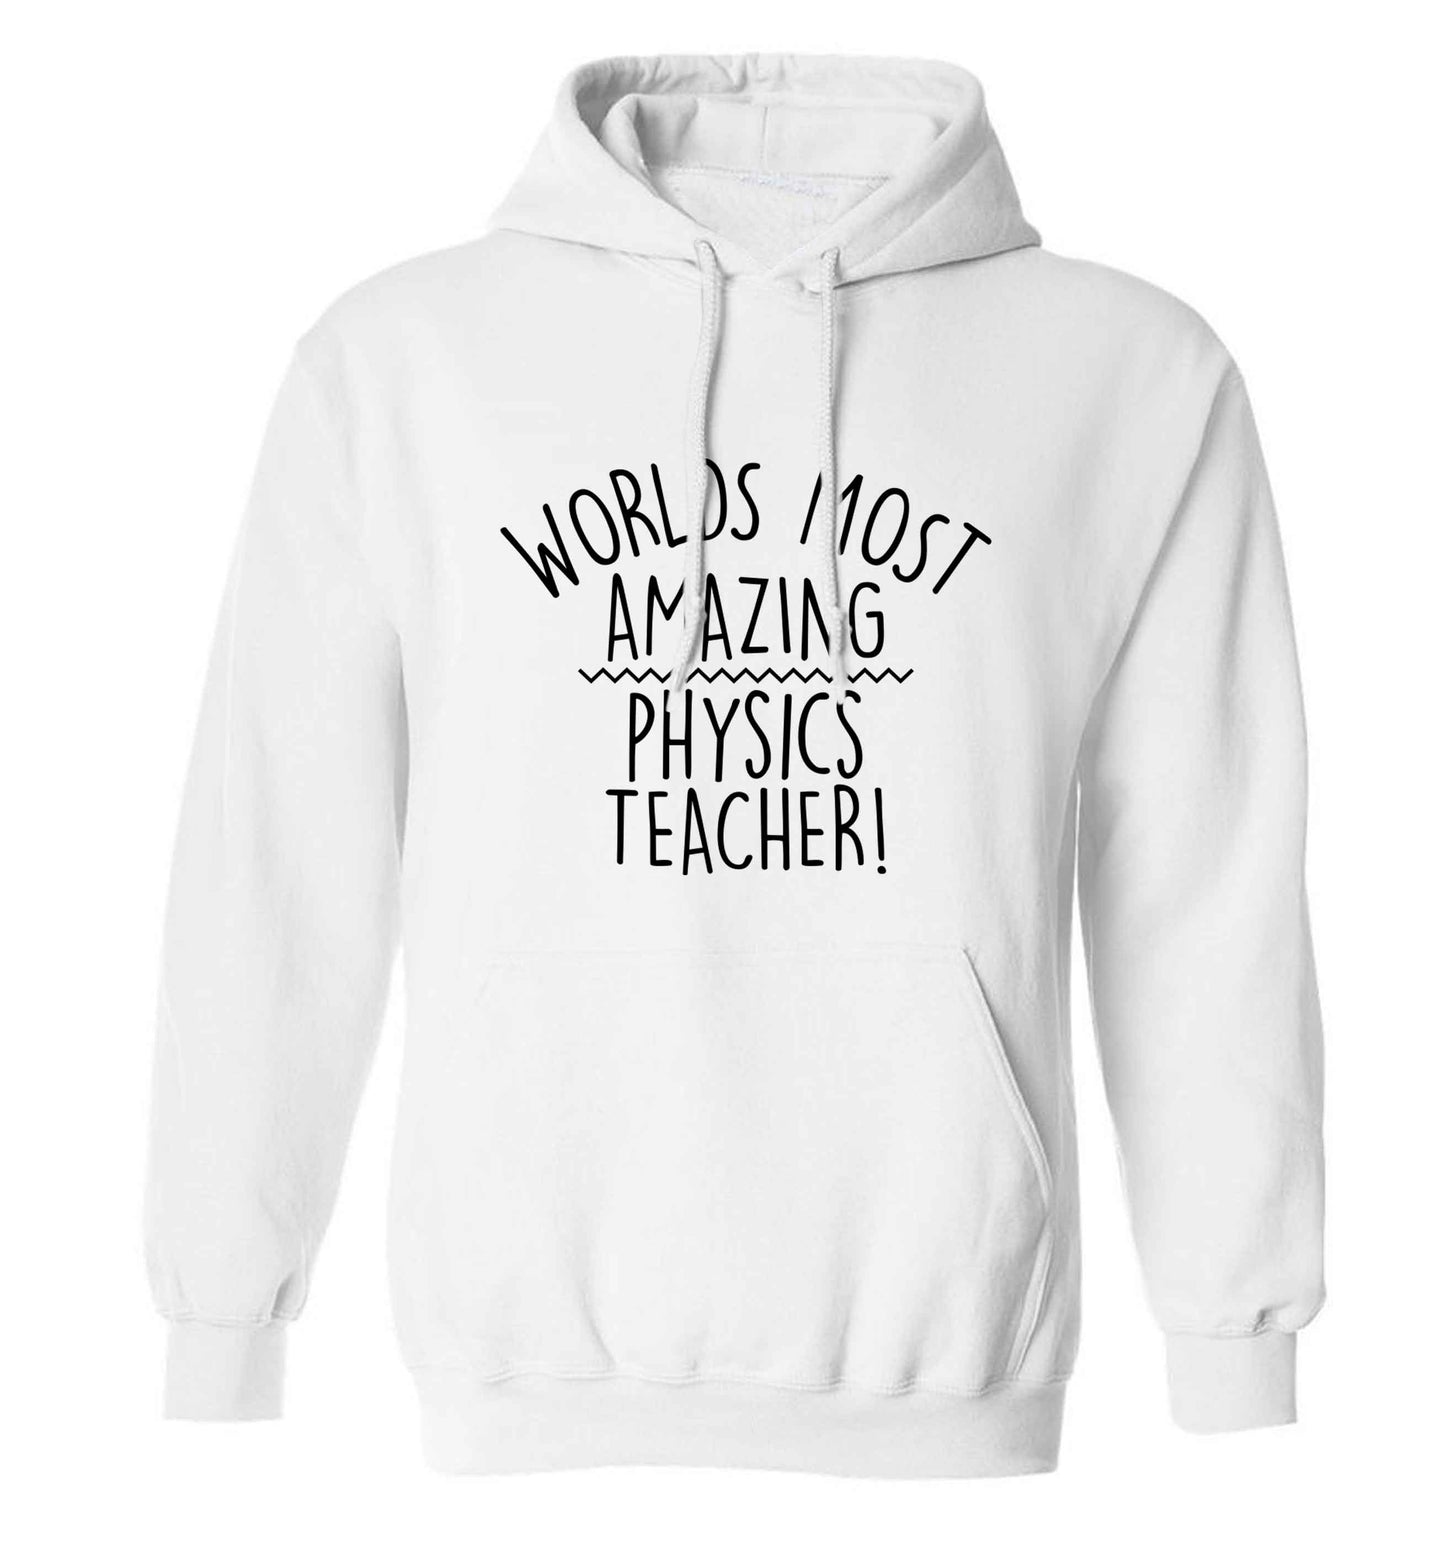 Worlds most amazing physics teacher adults unisex white hoodie 2XL